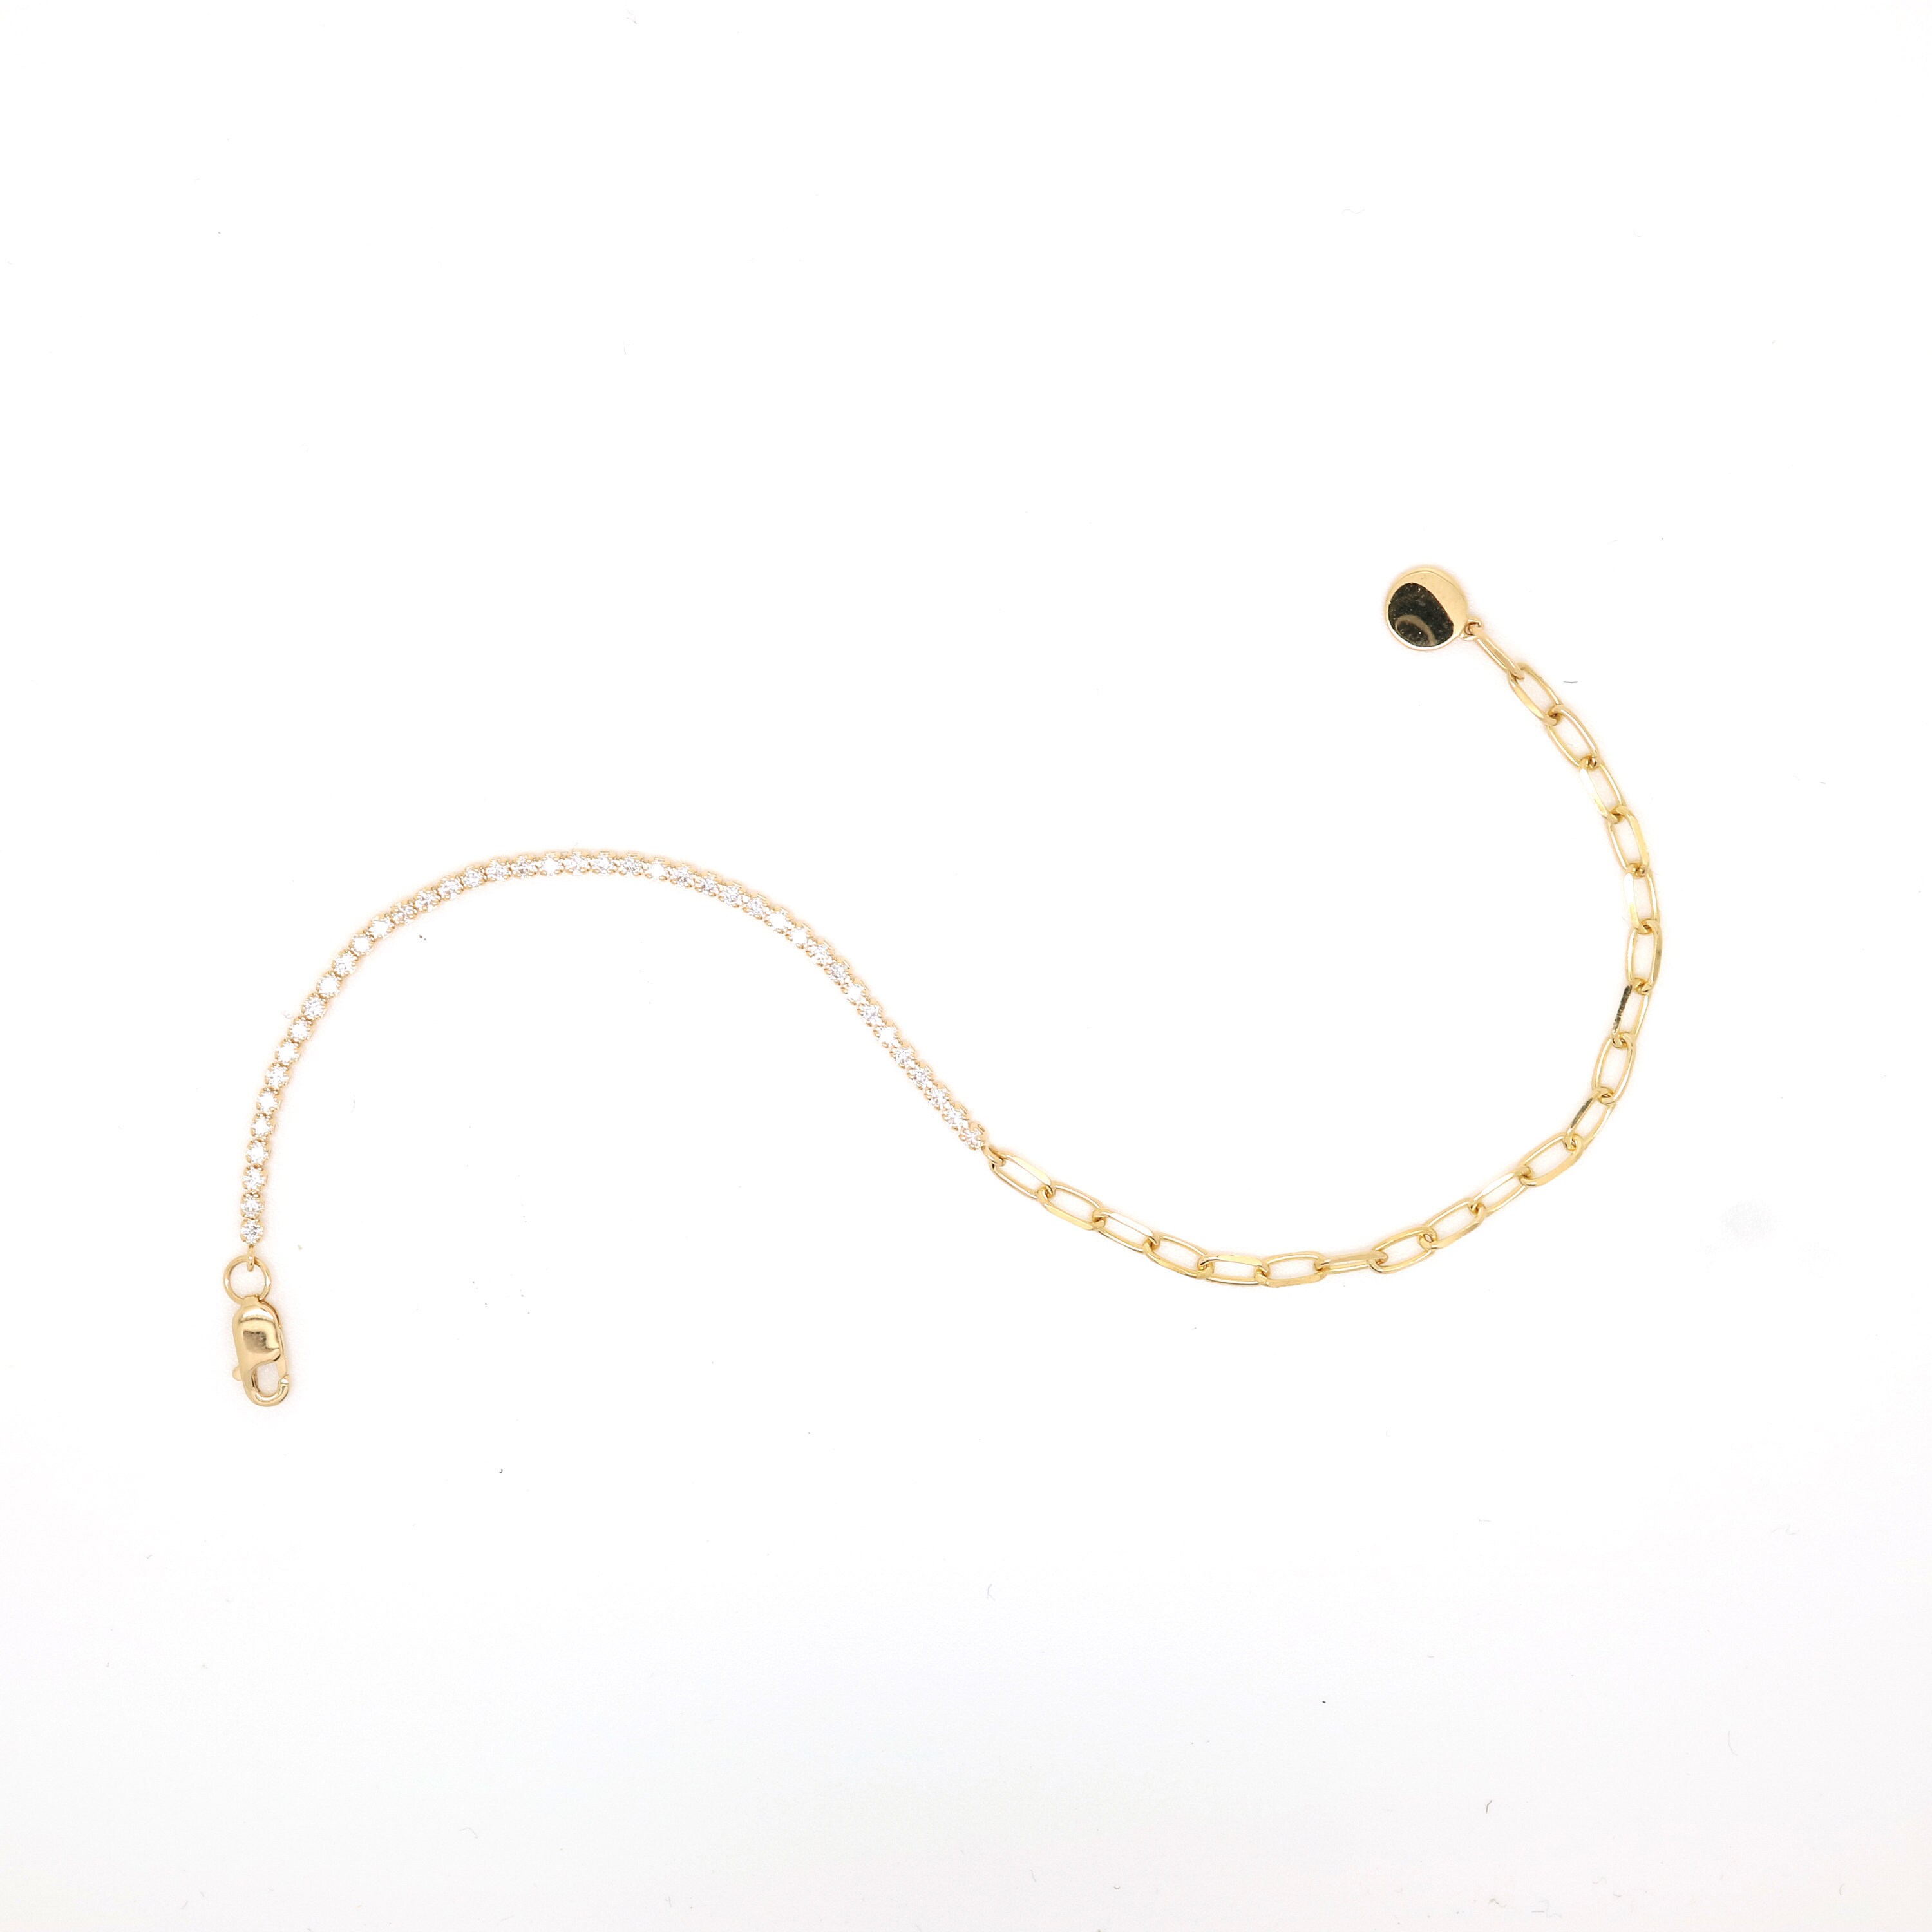 45ctw Diamond Paper Clip Bracelet - Underwoods Jewelers